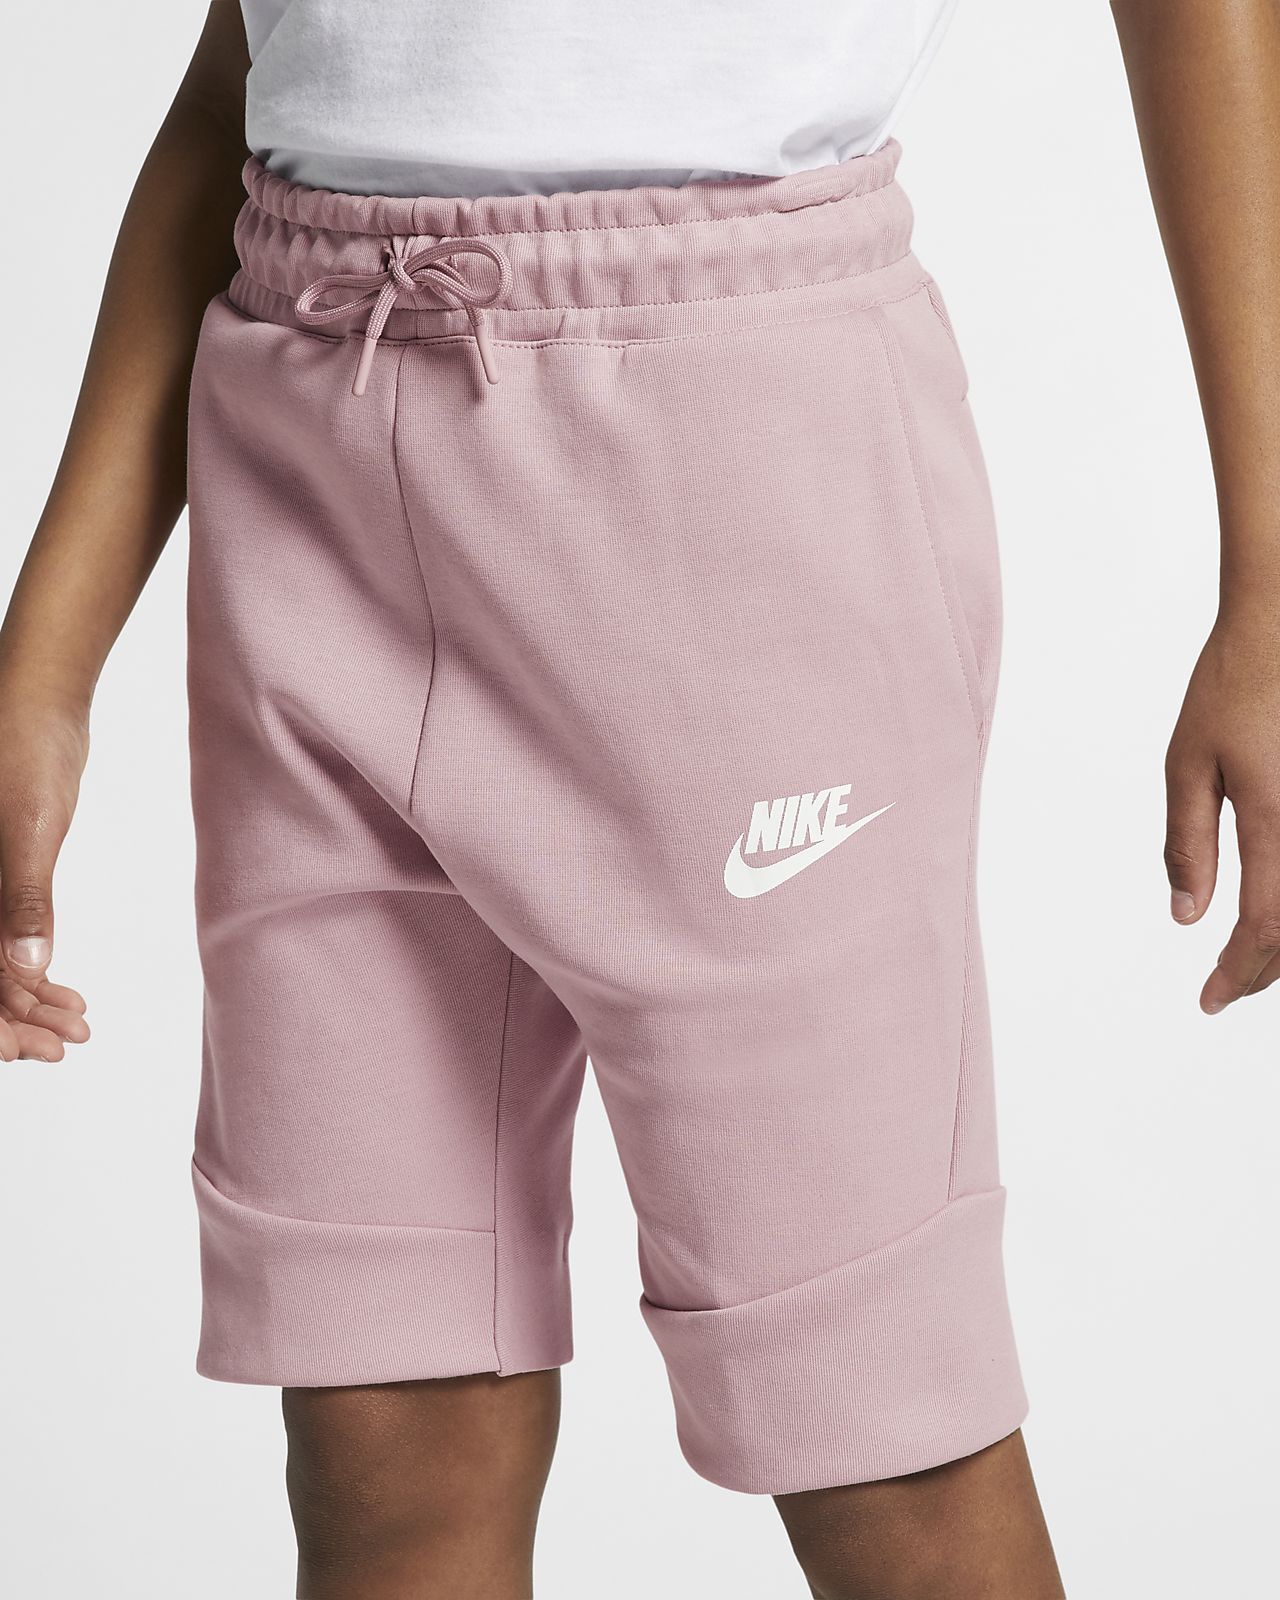 light pink nike shorts mens 